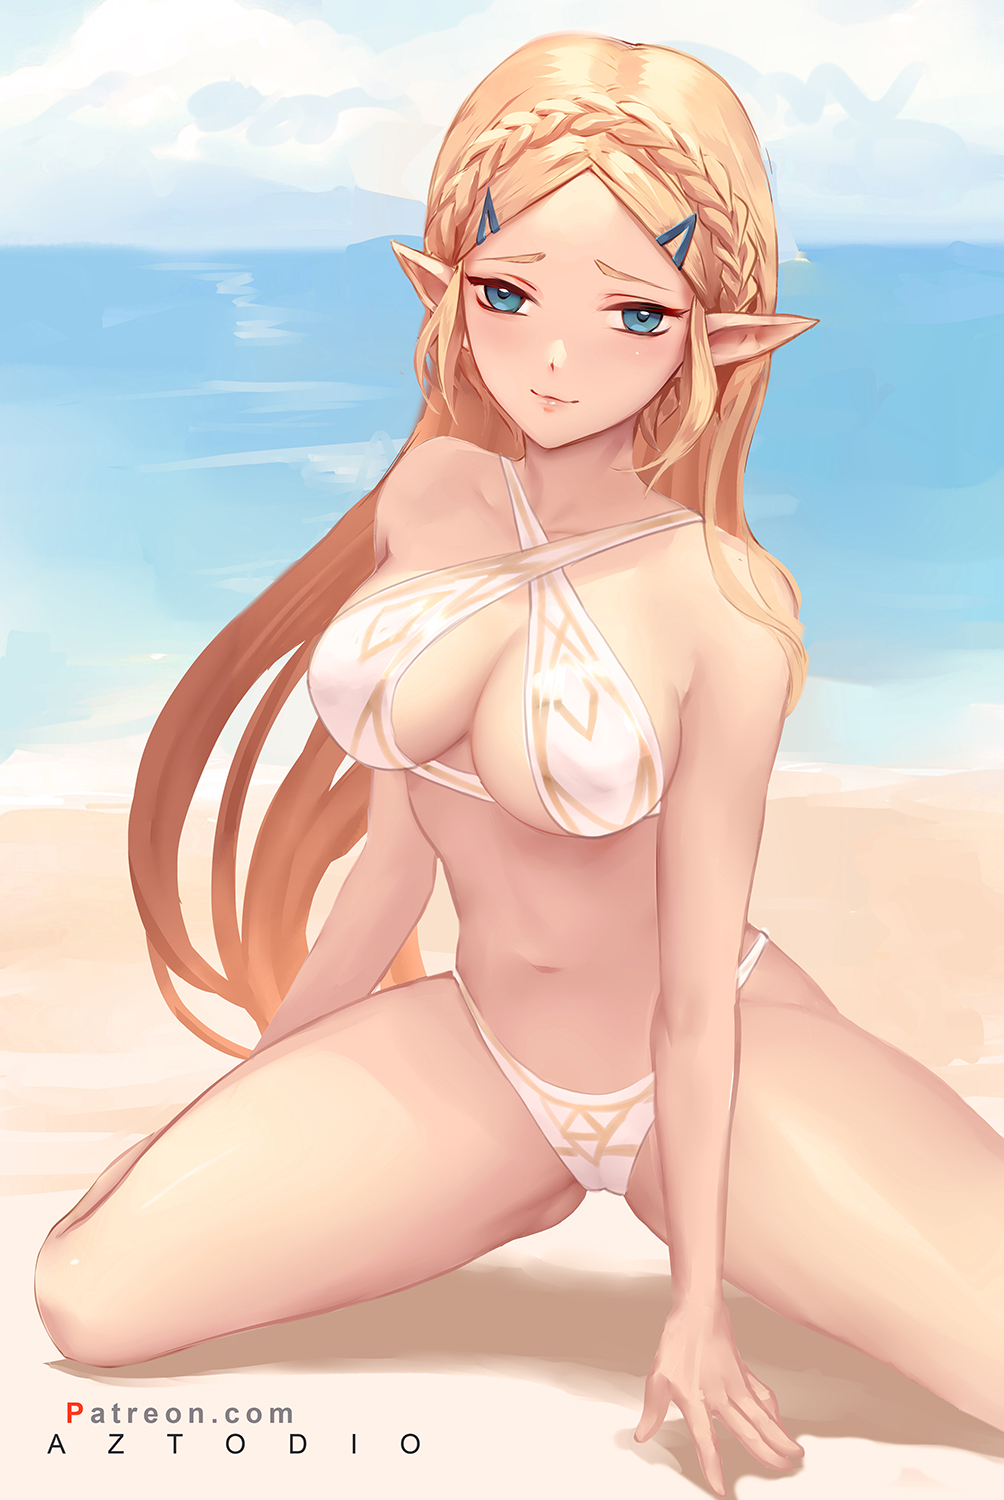 Anime 1004x1500 anime anime girls digital art artwork 2D portrait display Azto Dio The Legend of Zelda Zelda beach bikini elves blonde long hair blue eyes cleavage